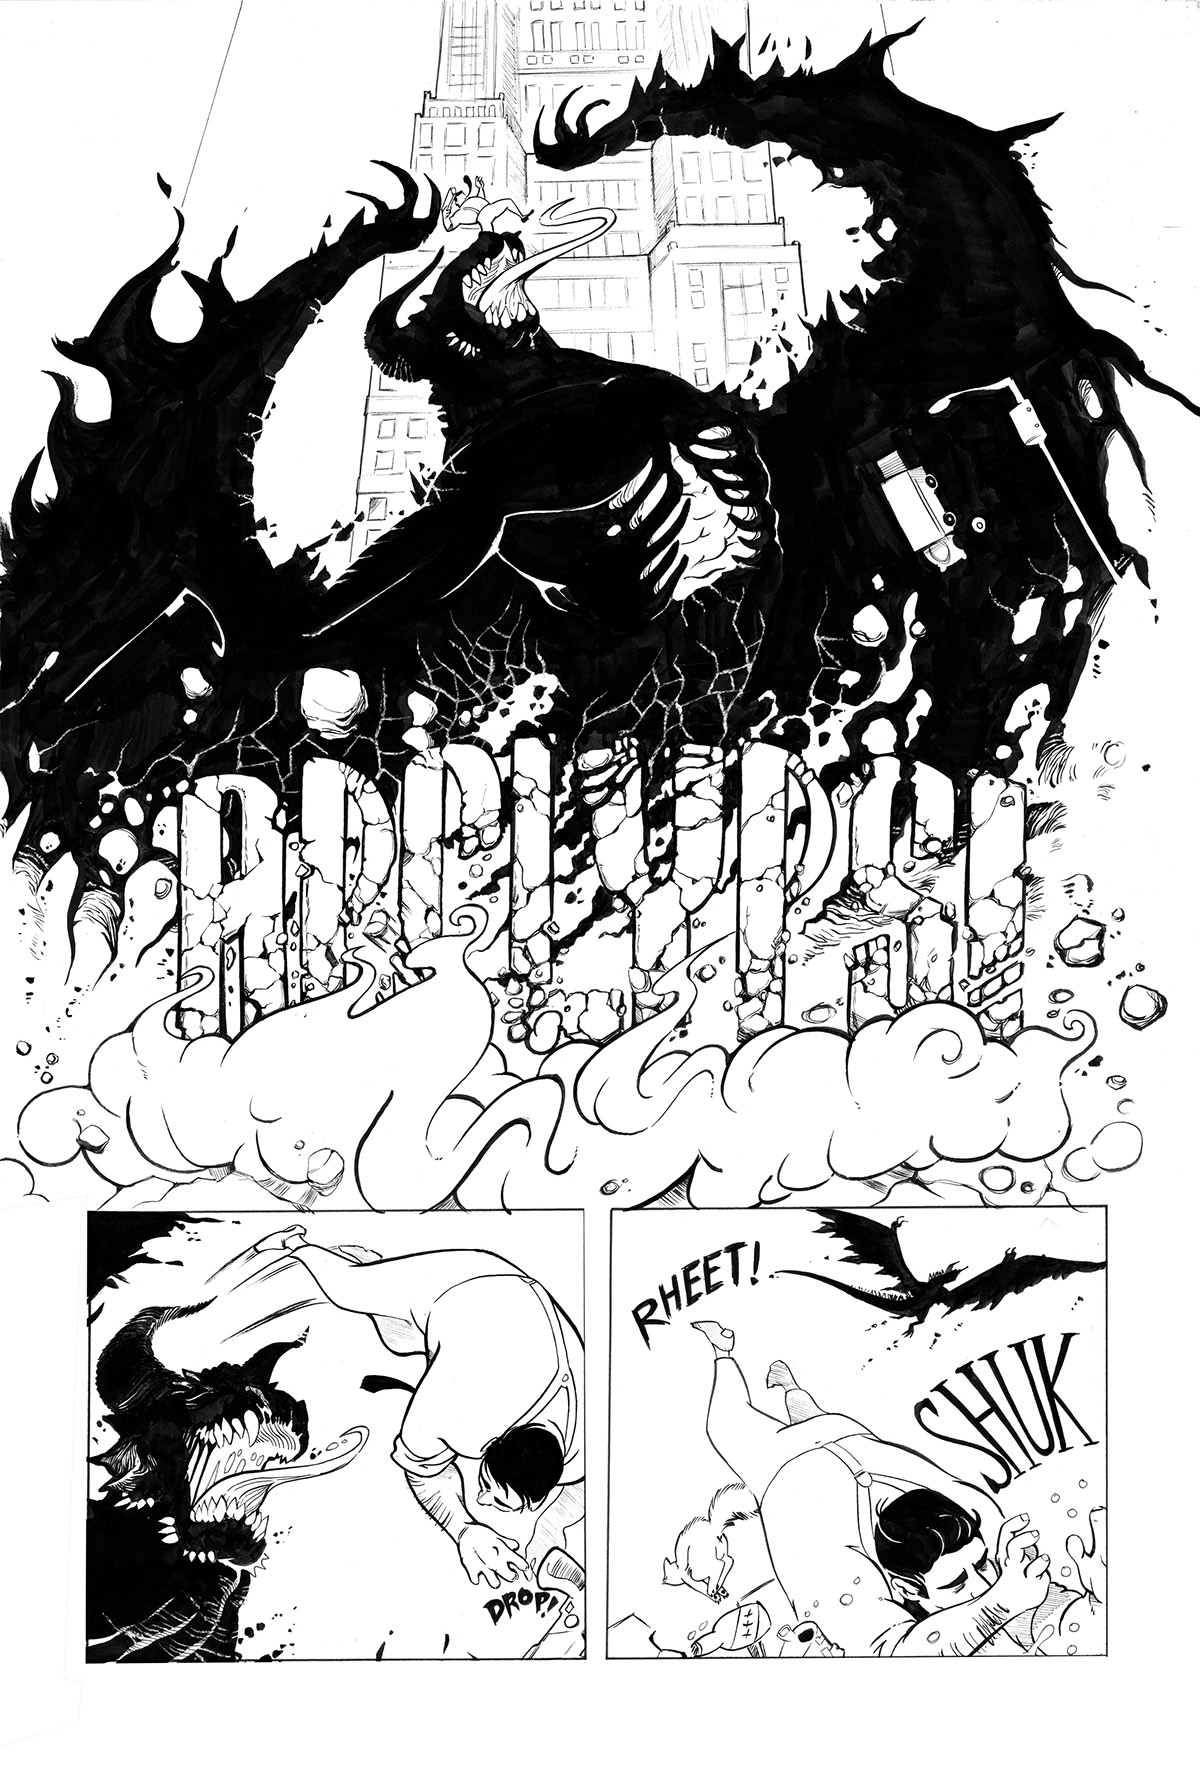 Hunter Quaid  dark horse  comics  publication  superheroes  time-travel  fantasy  layout  branding  character  comic books  Books